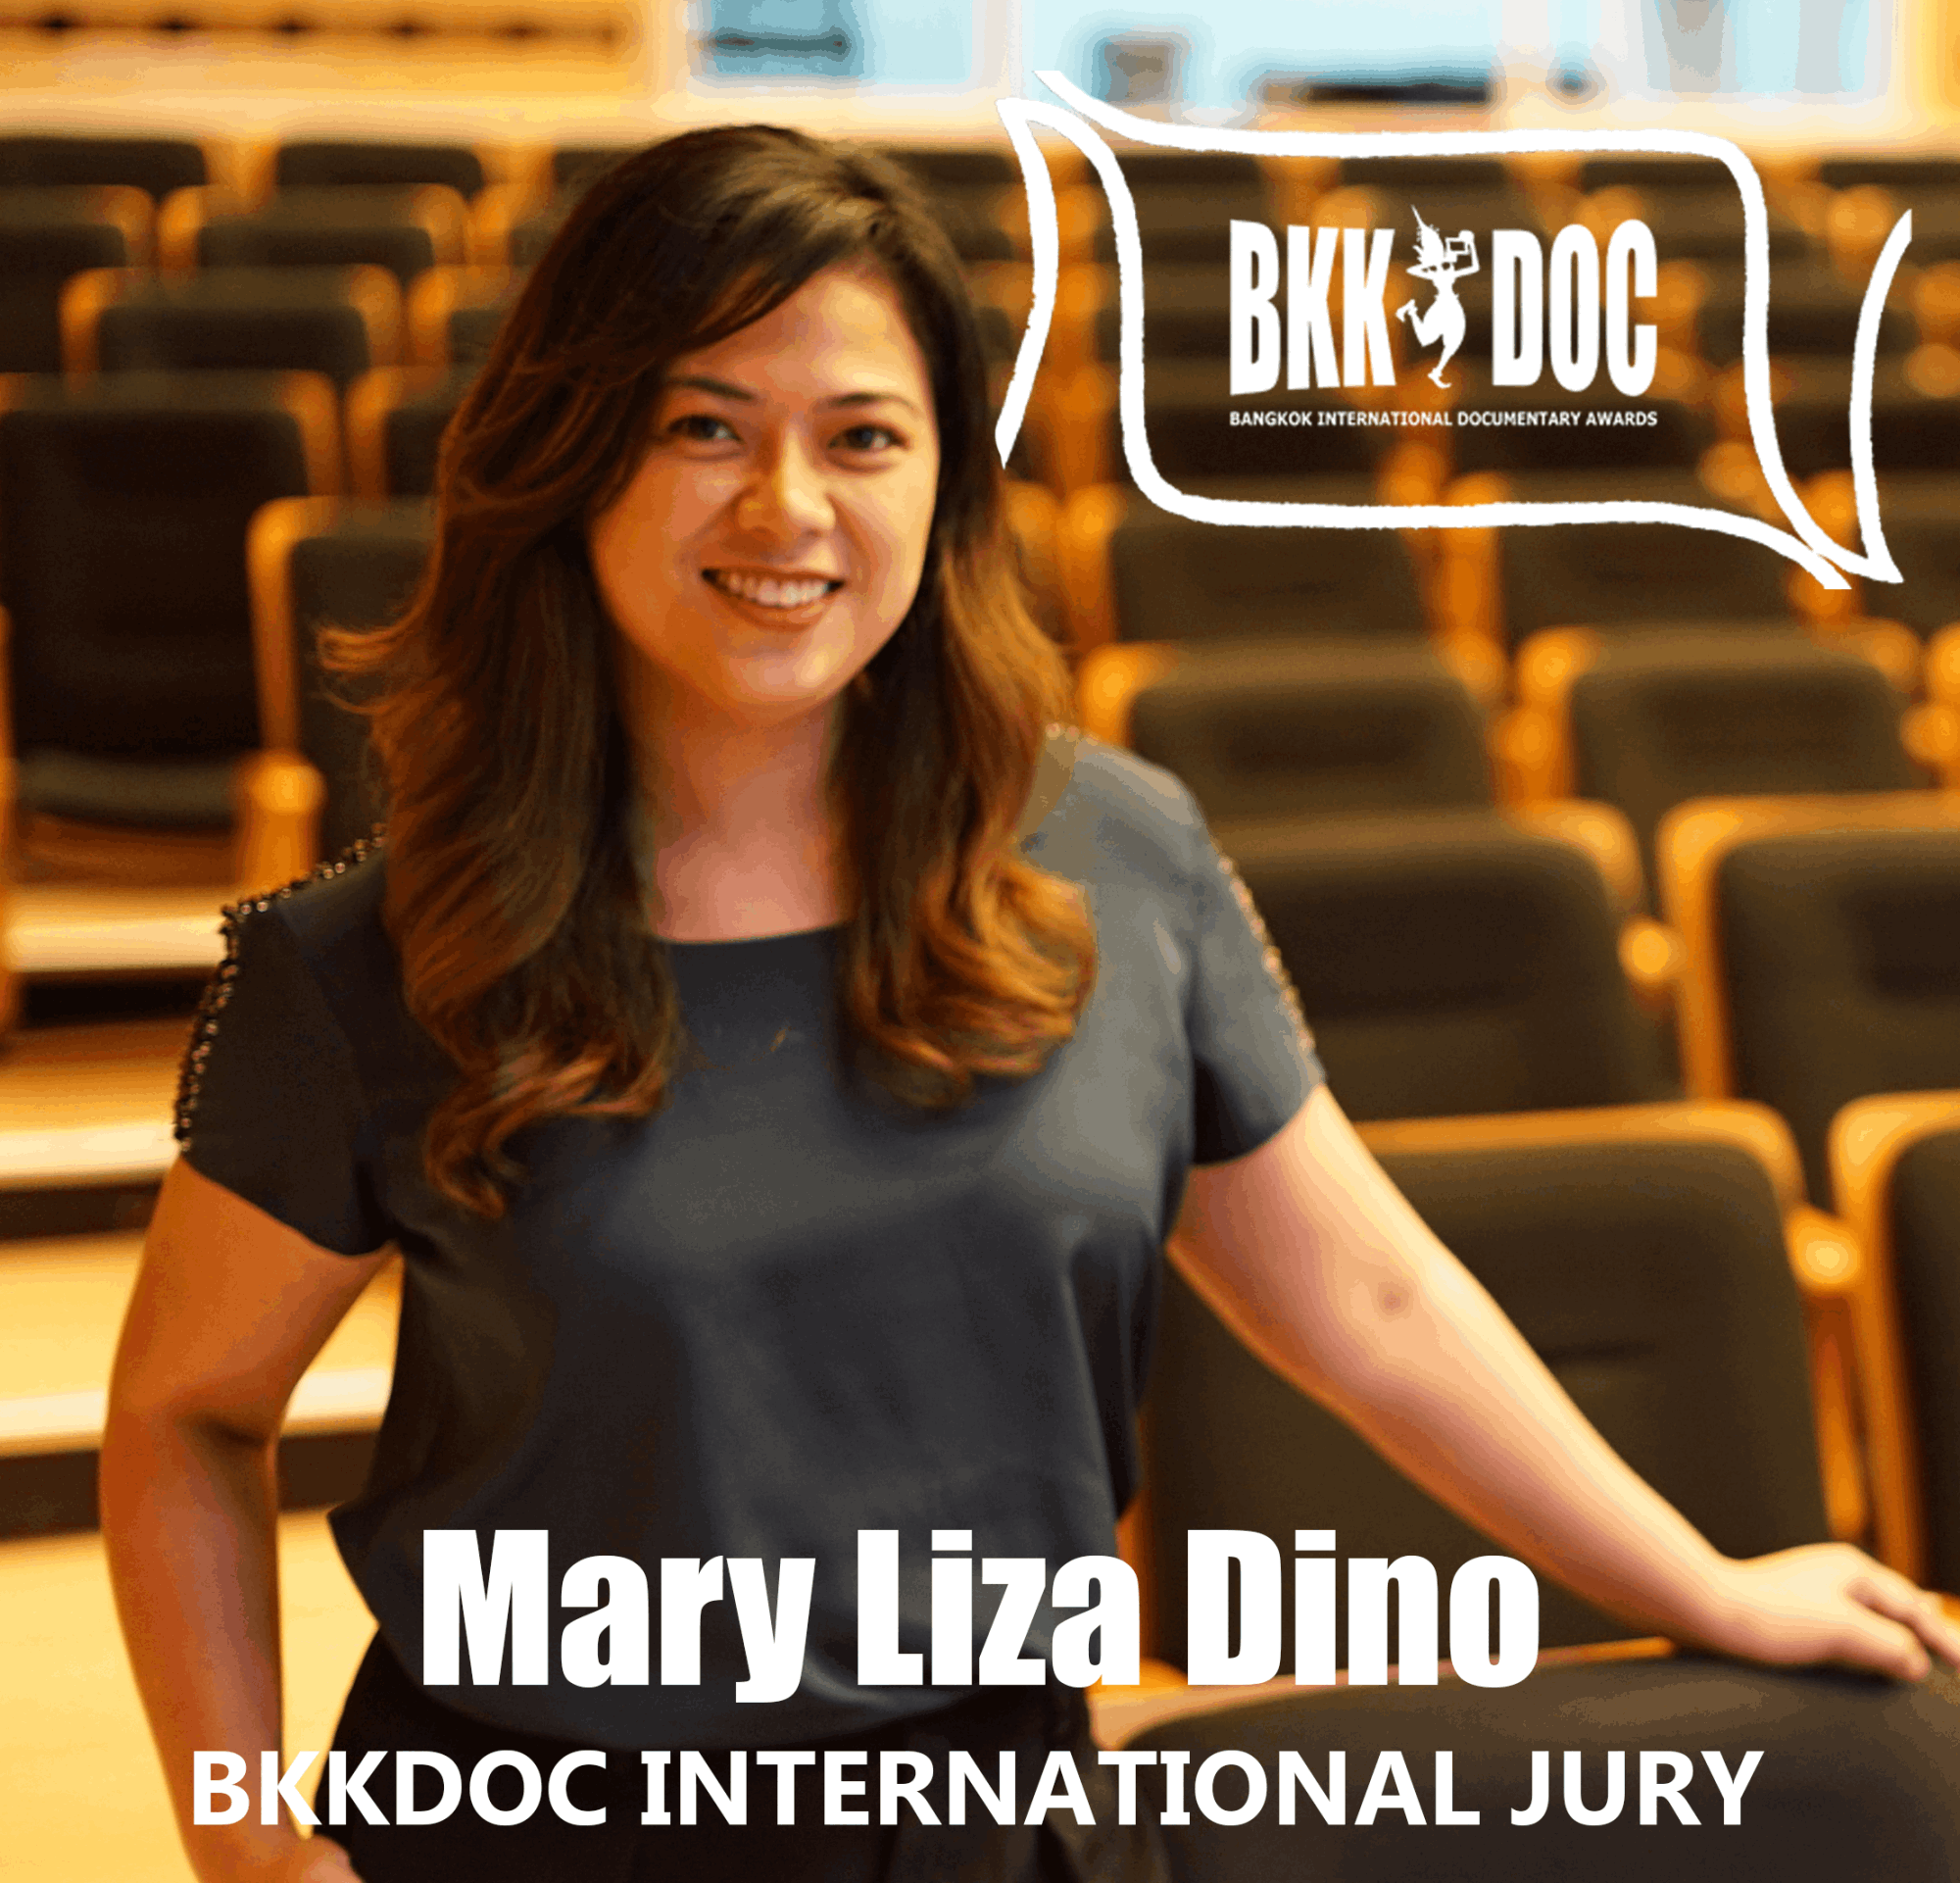 Mary Dino Bkk Doc International Jury